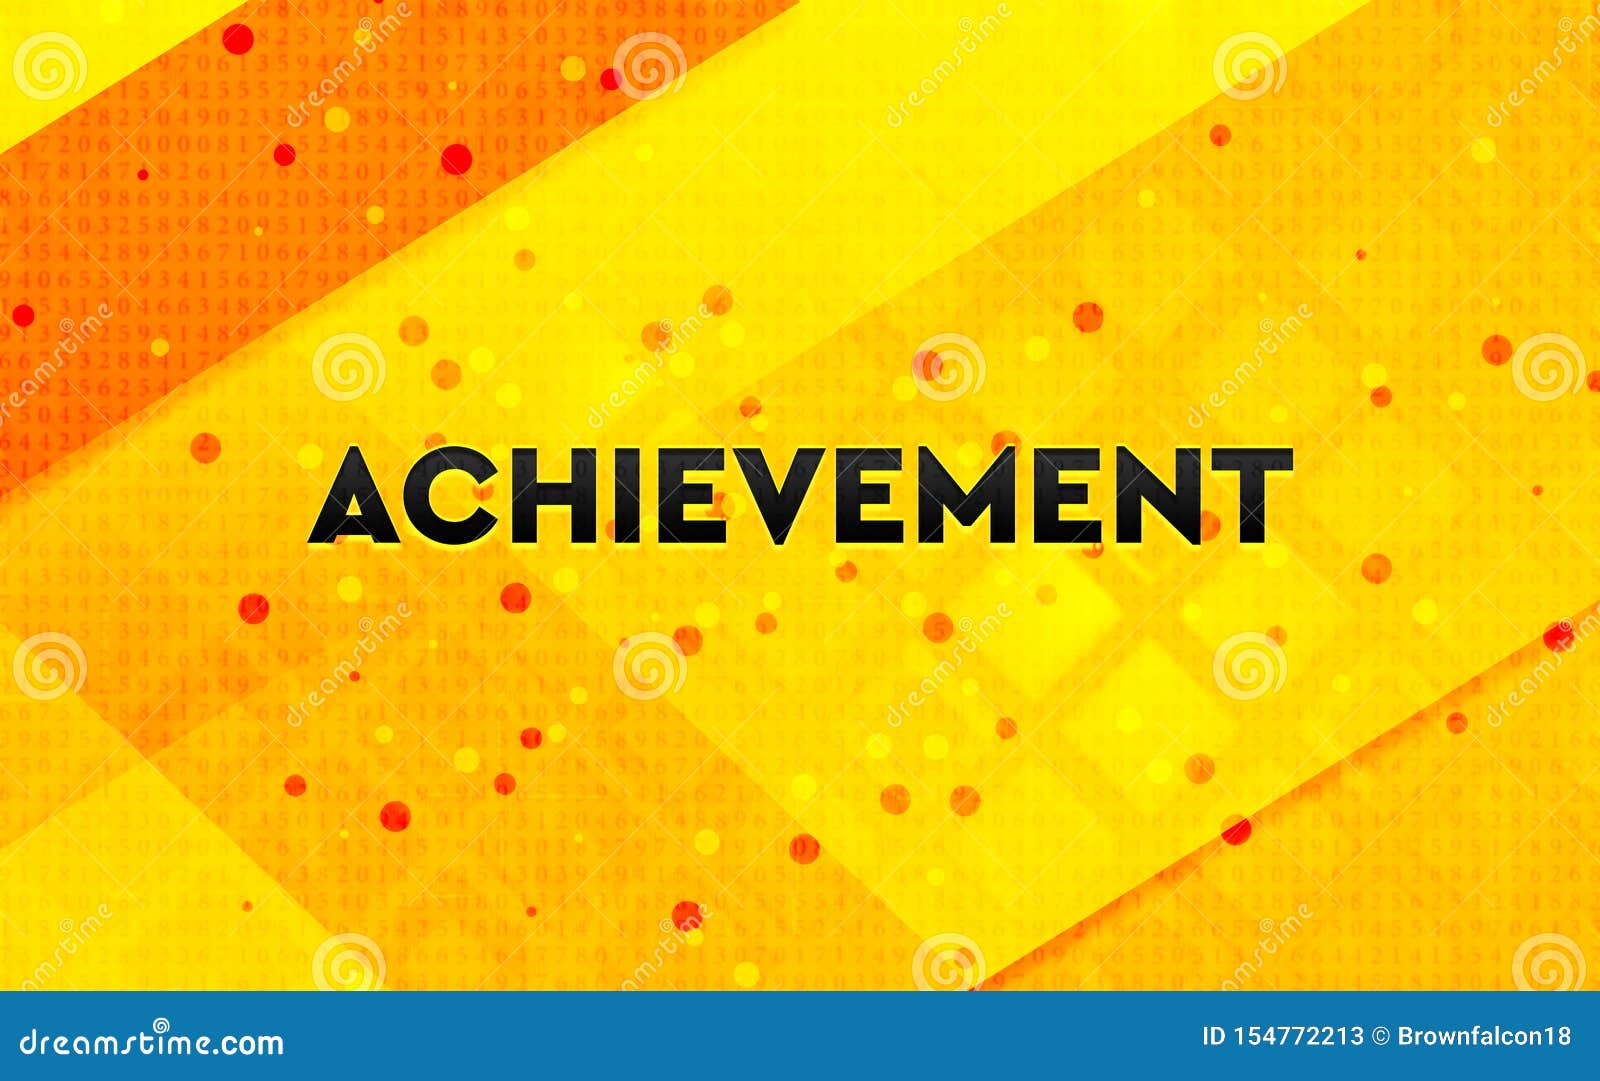 achievement abstract digital banner yellow background